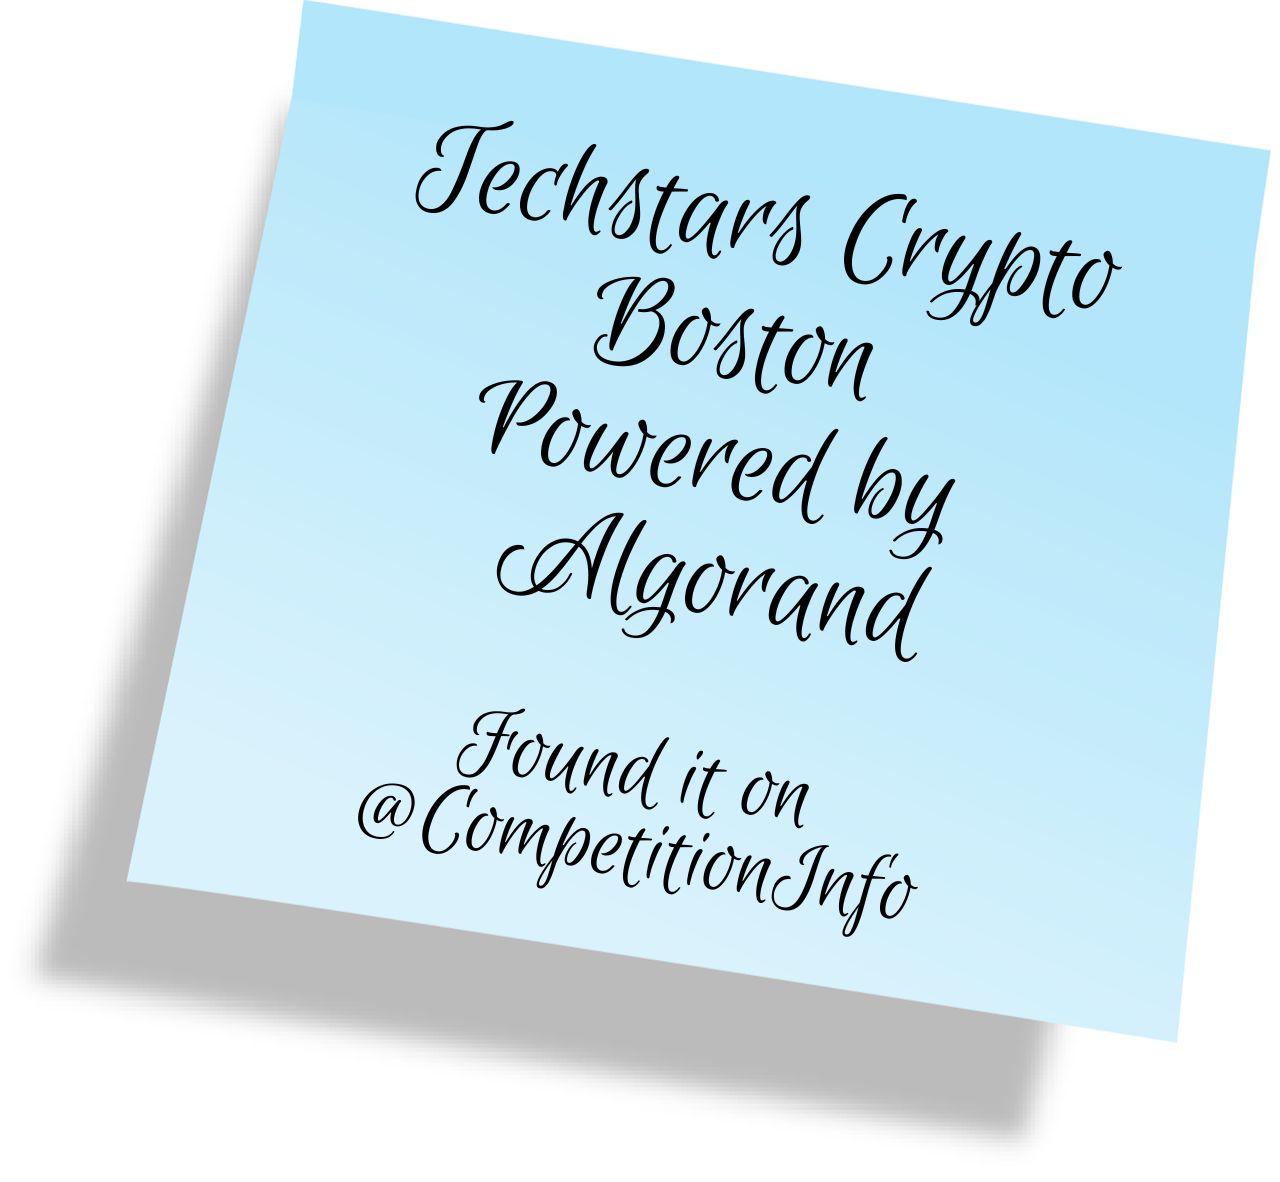 Techstars Crypto Boston Powered by Algorand